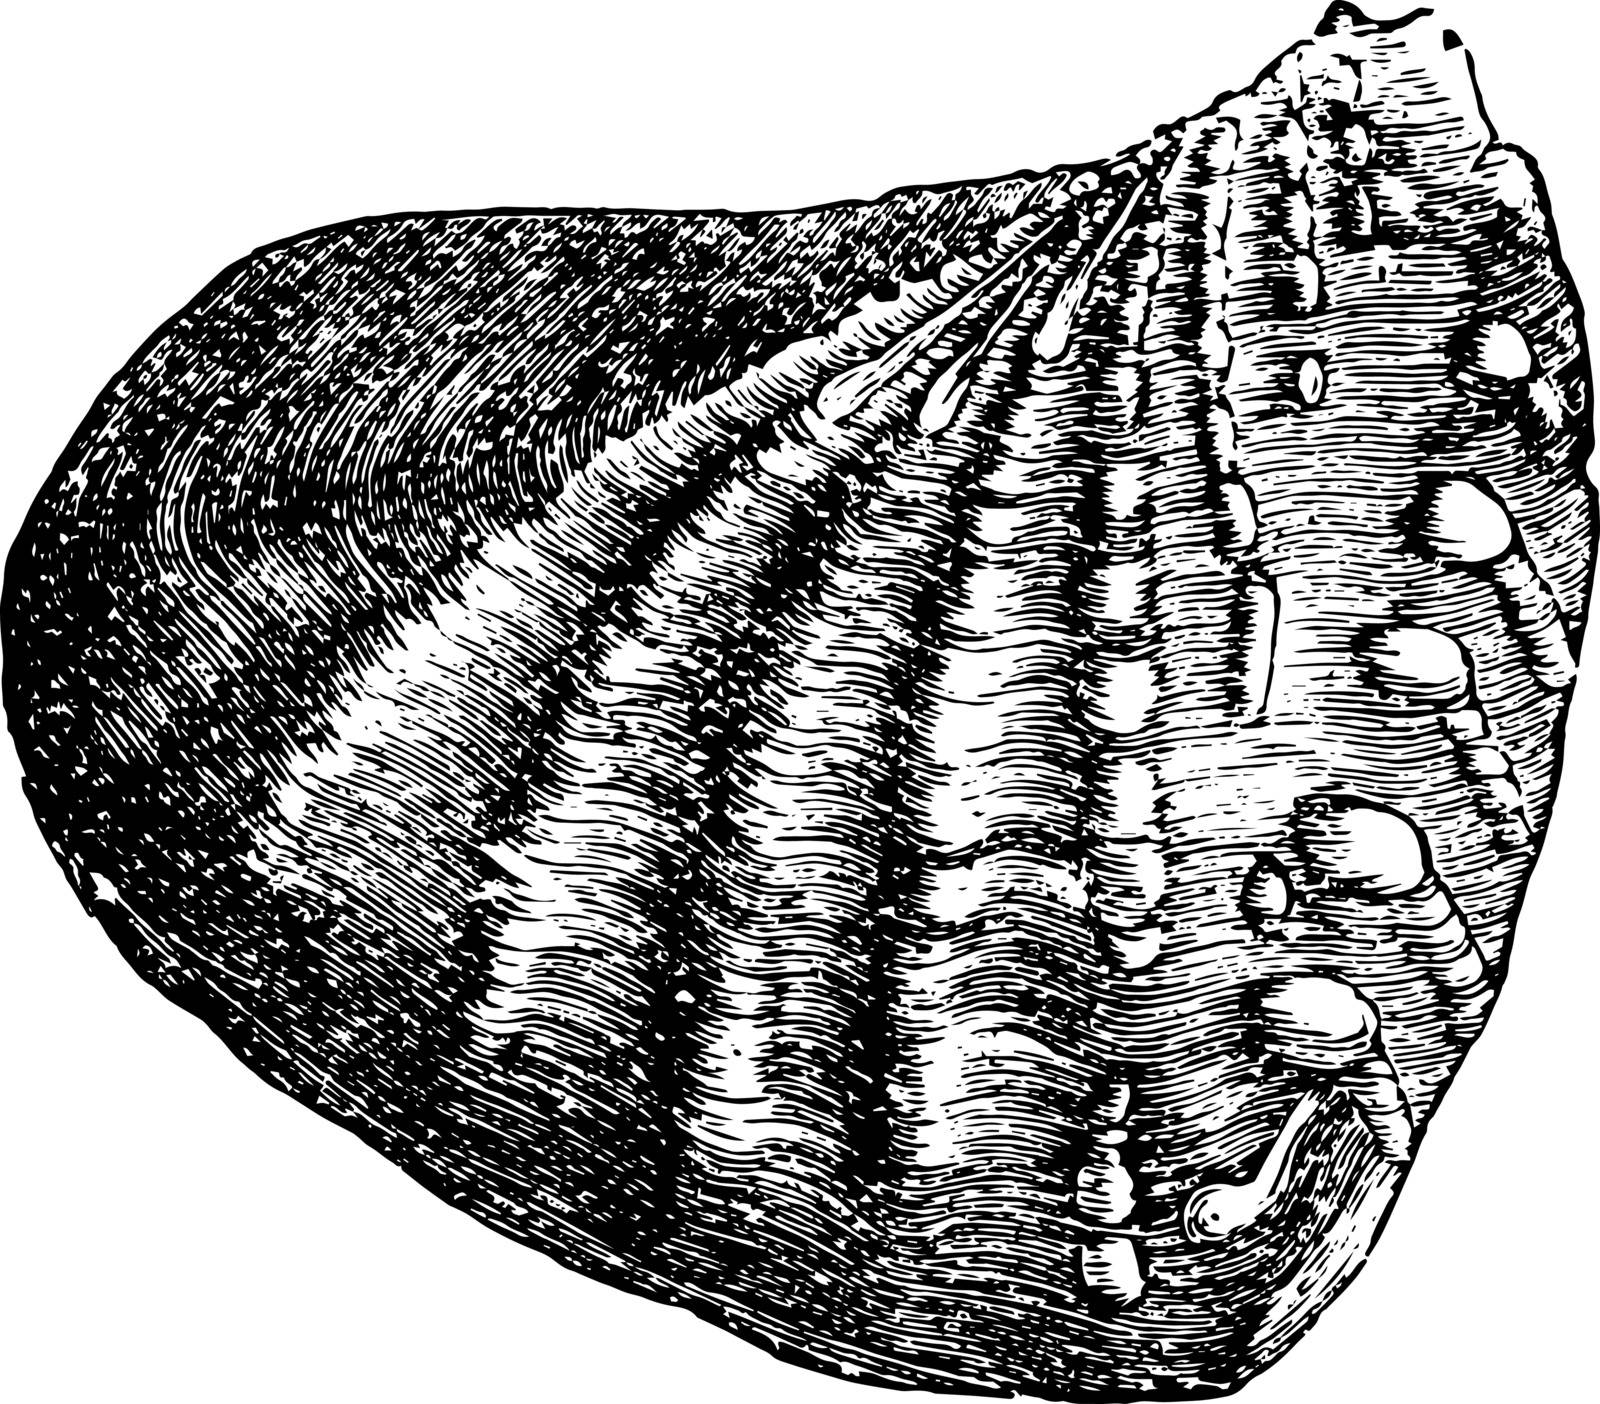 Trigonia is an extinct genus of saltwater clams fossil marine bivalve mollusk in the family Trigoniidae, vintage line drawing or engraving illustration.